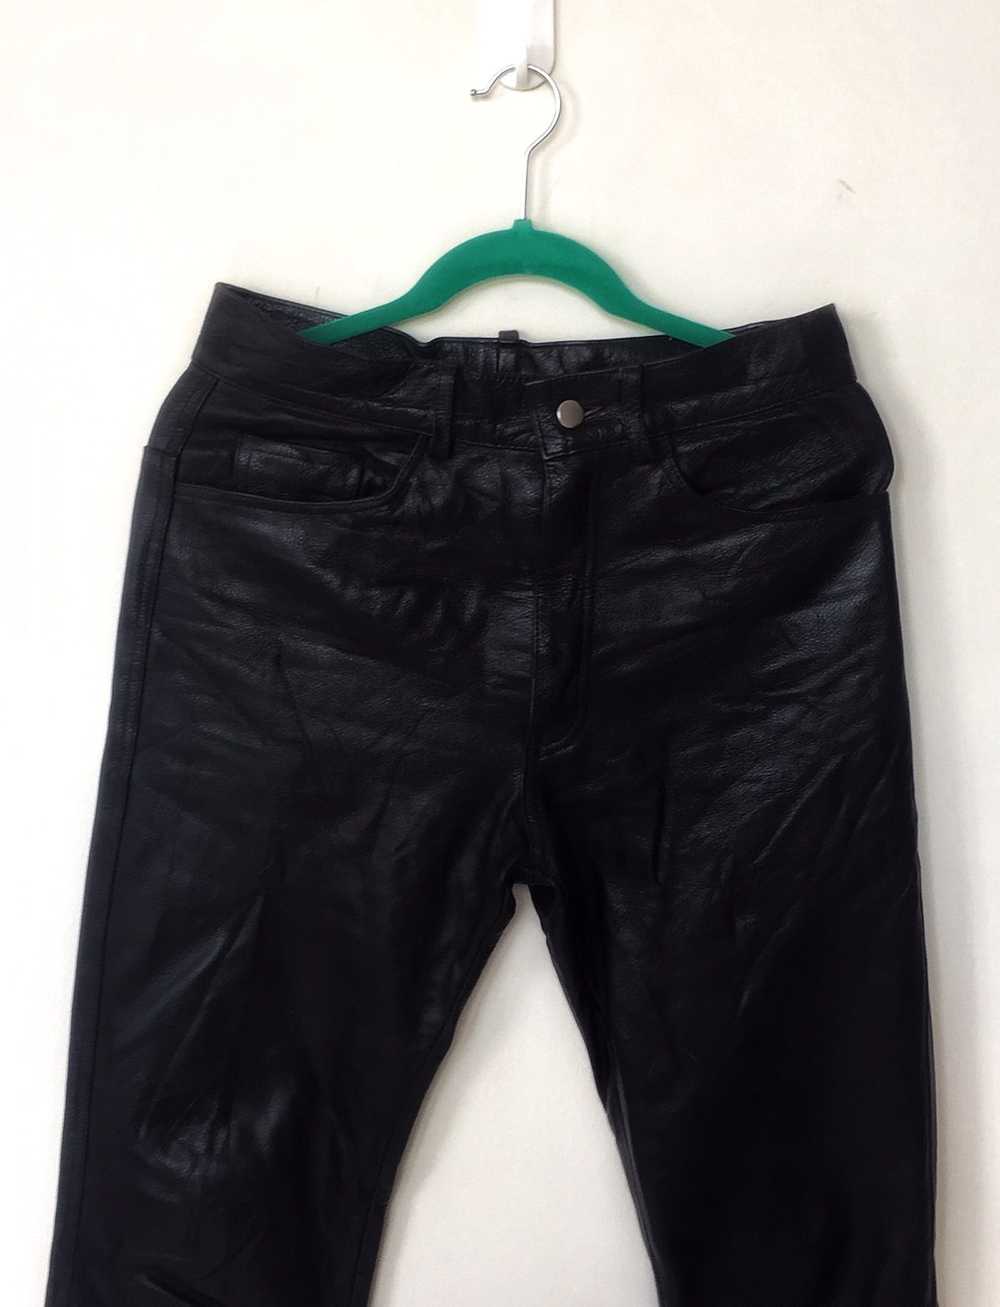 Genuine Leather Genuine Leather jeans - image 3